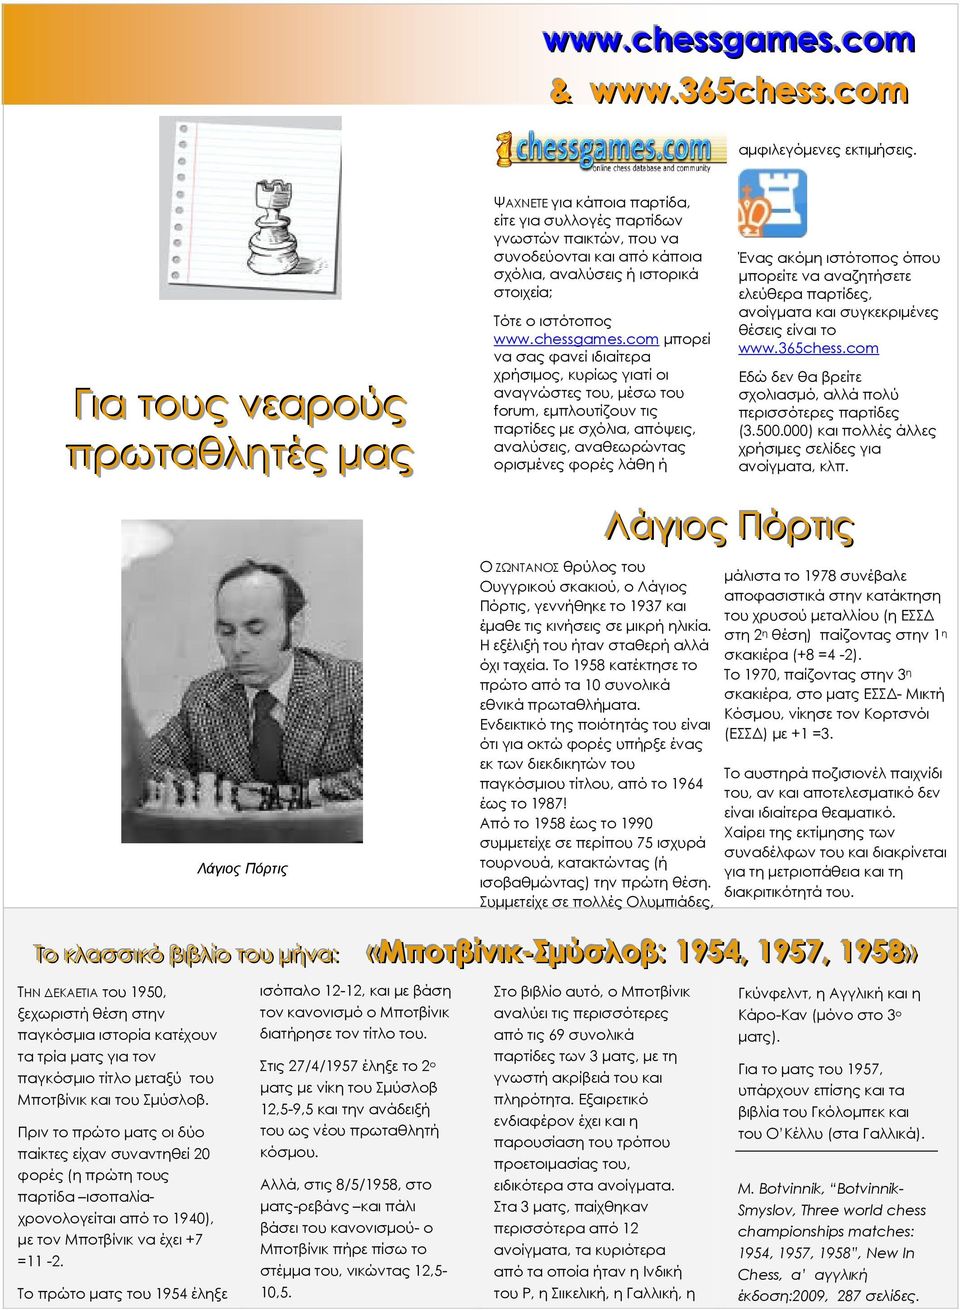 www.chessgames.